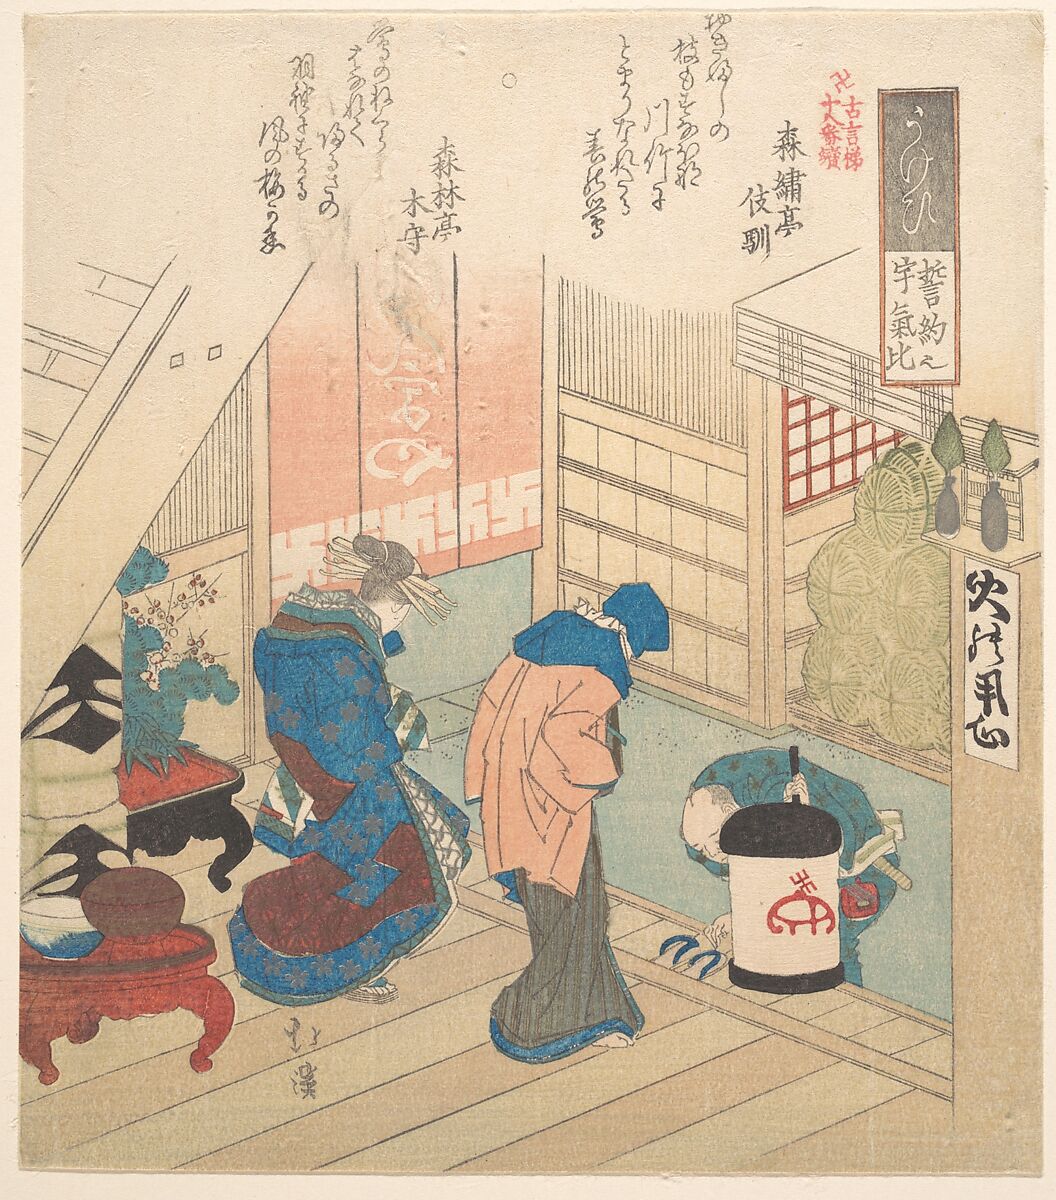 Print, Totoya Hokkei (Japanese, 1780–1850), Woodblock print (surimono); ink and color on paper, Japan 